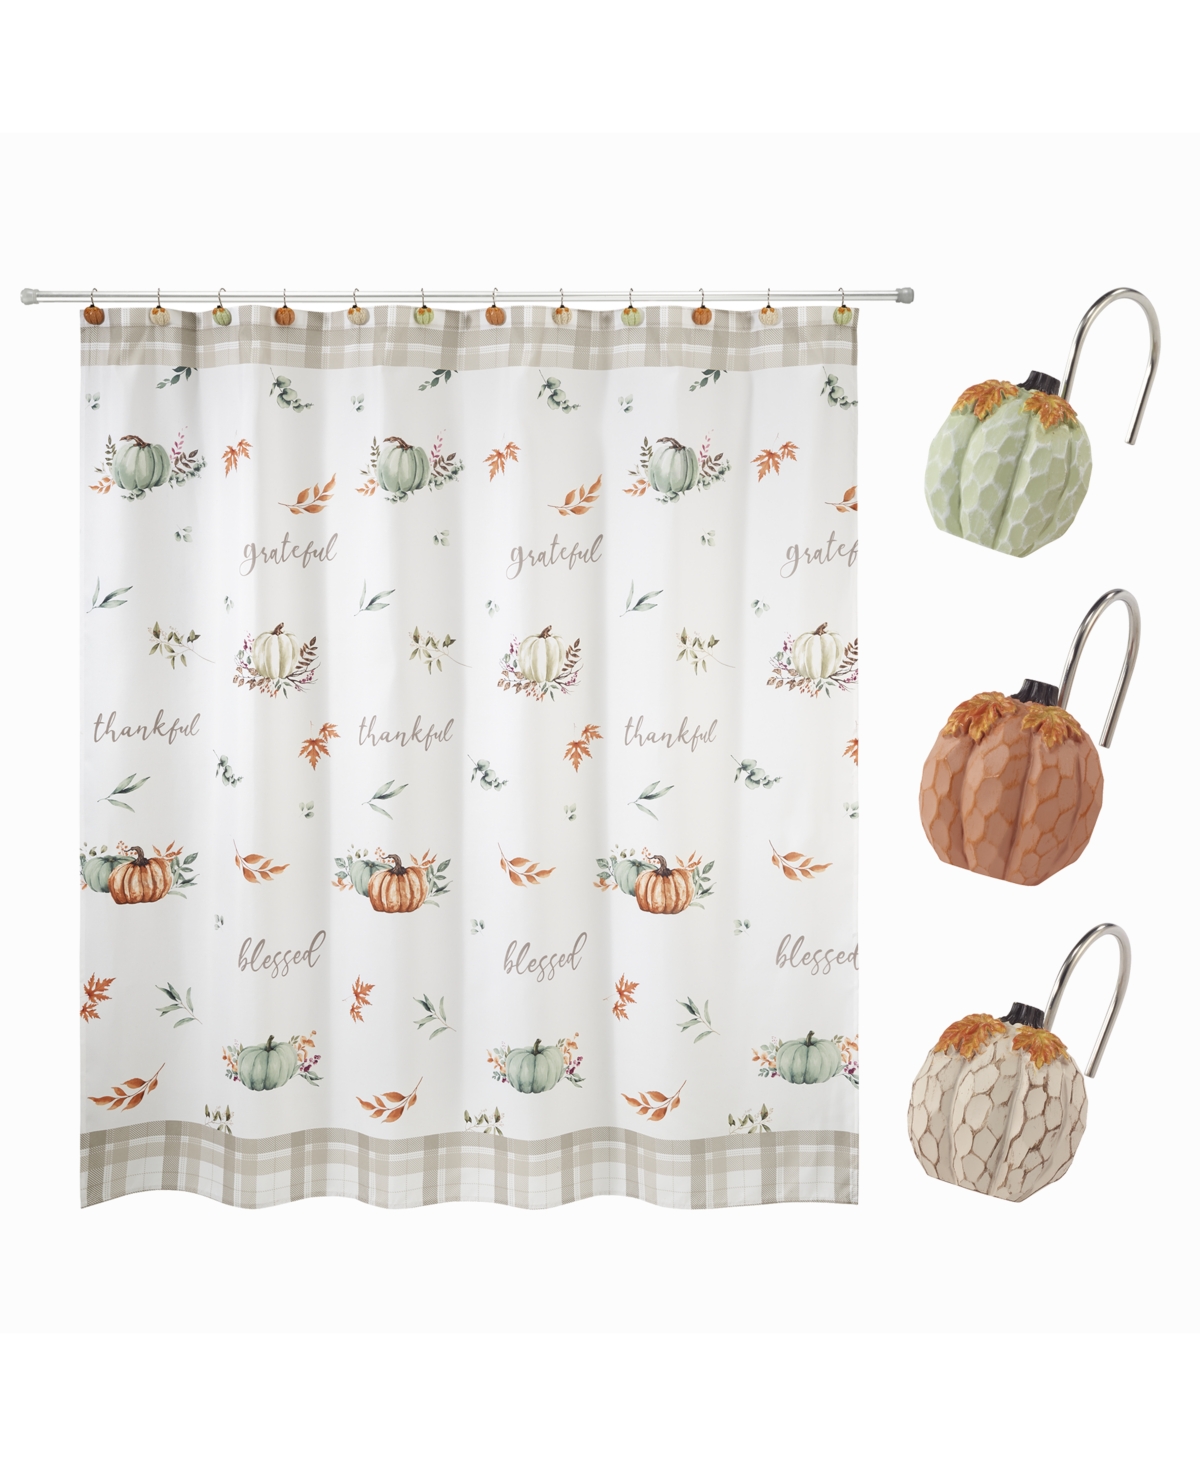 Avanti Grateful Patch Harvest 13-Pc. Shower Curtain & Hooks Set - Multicolor